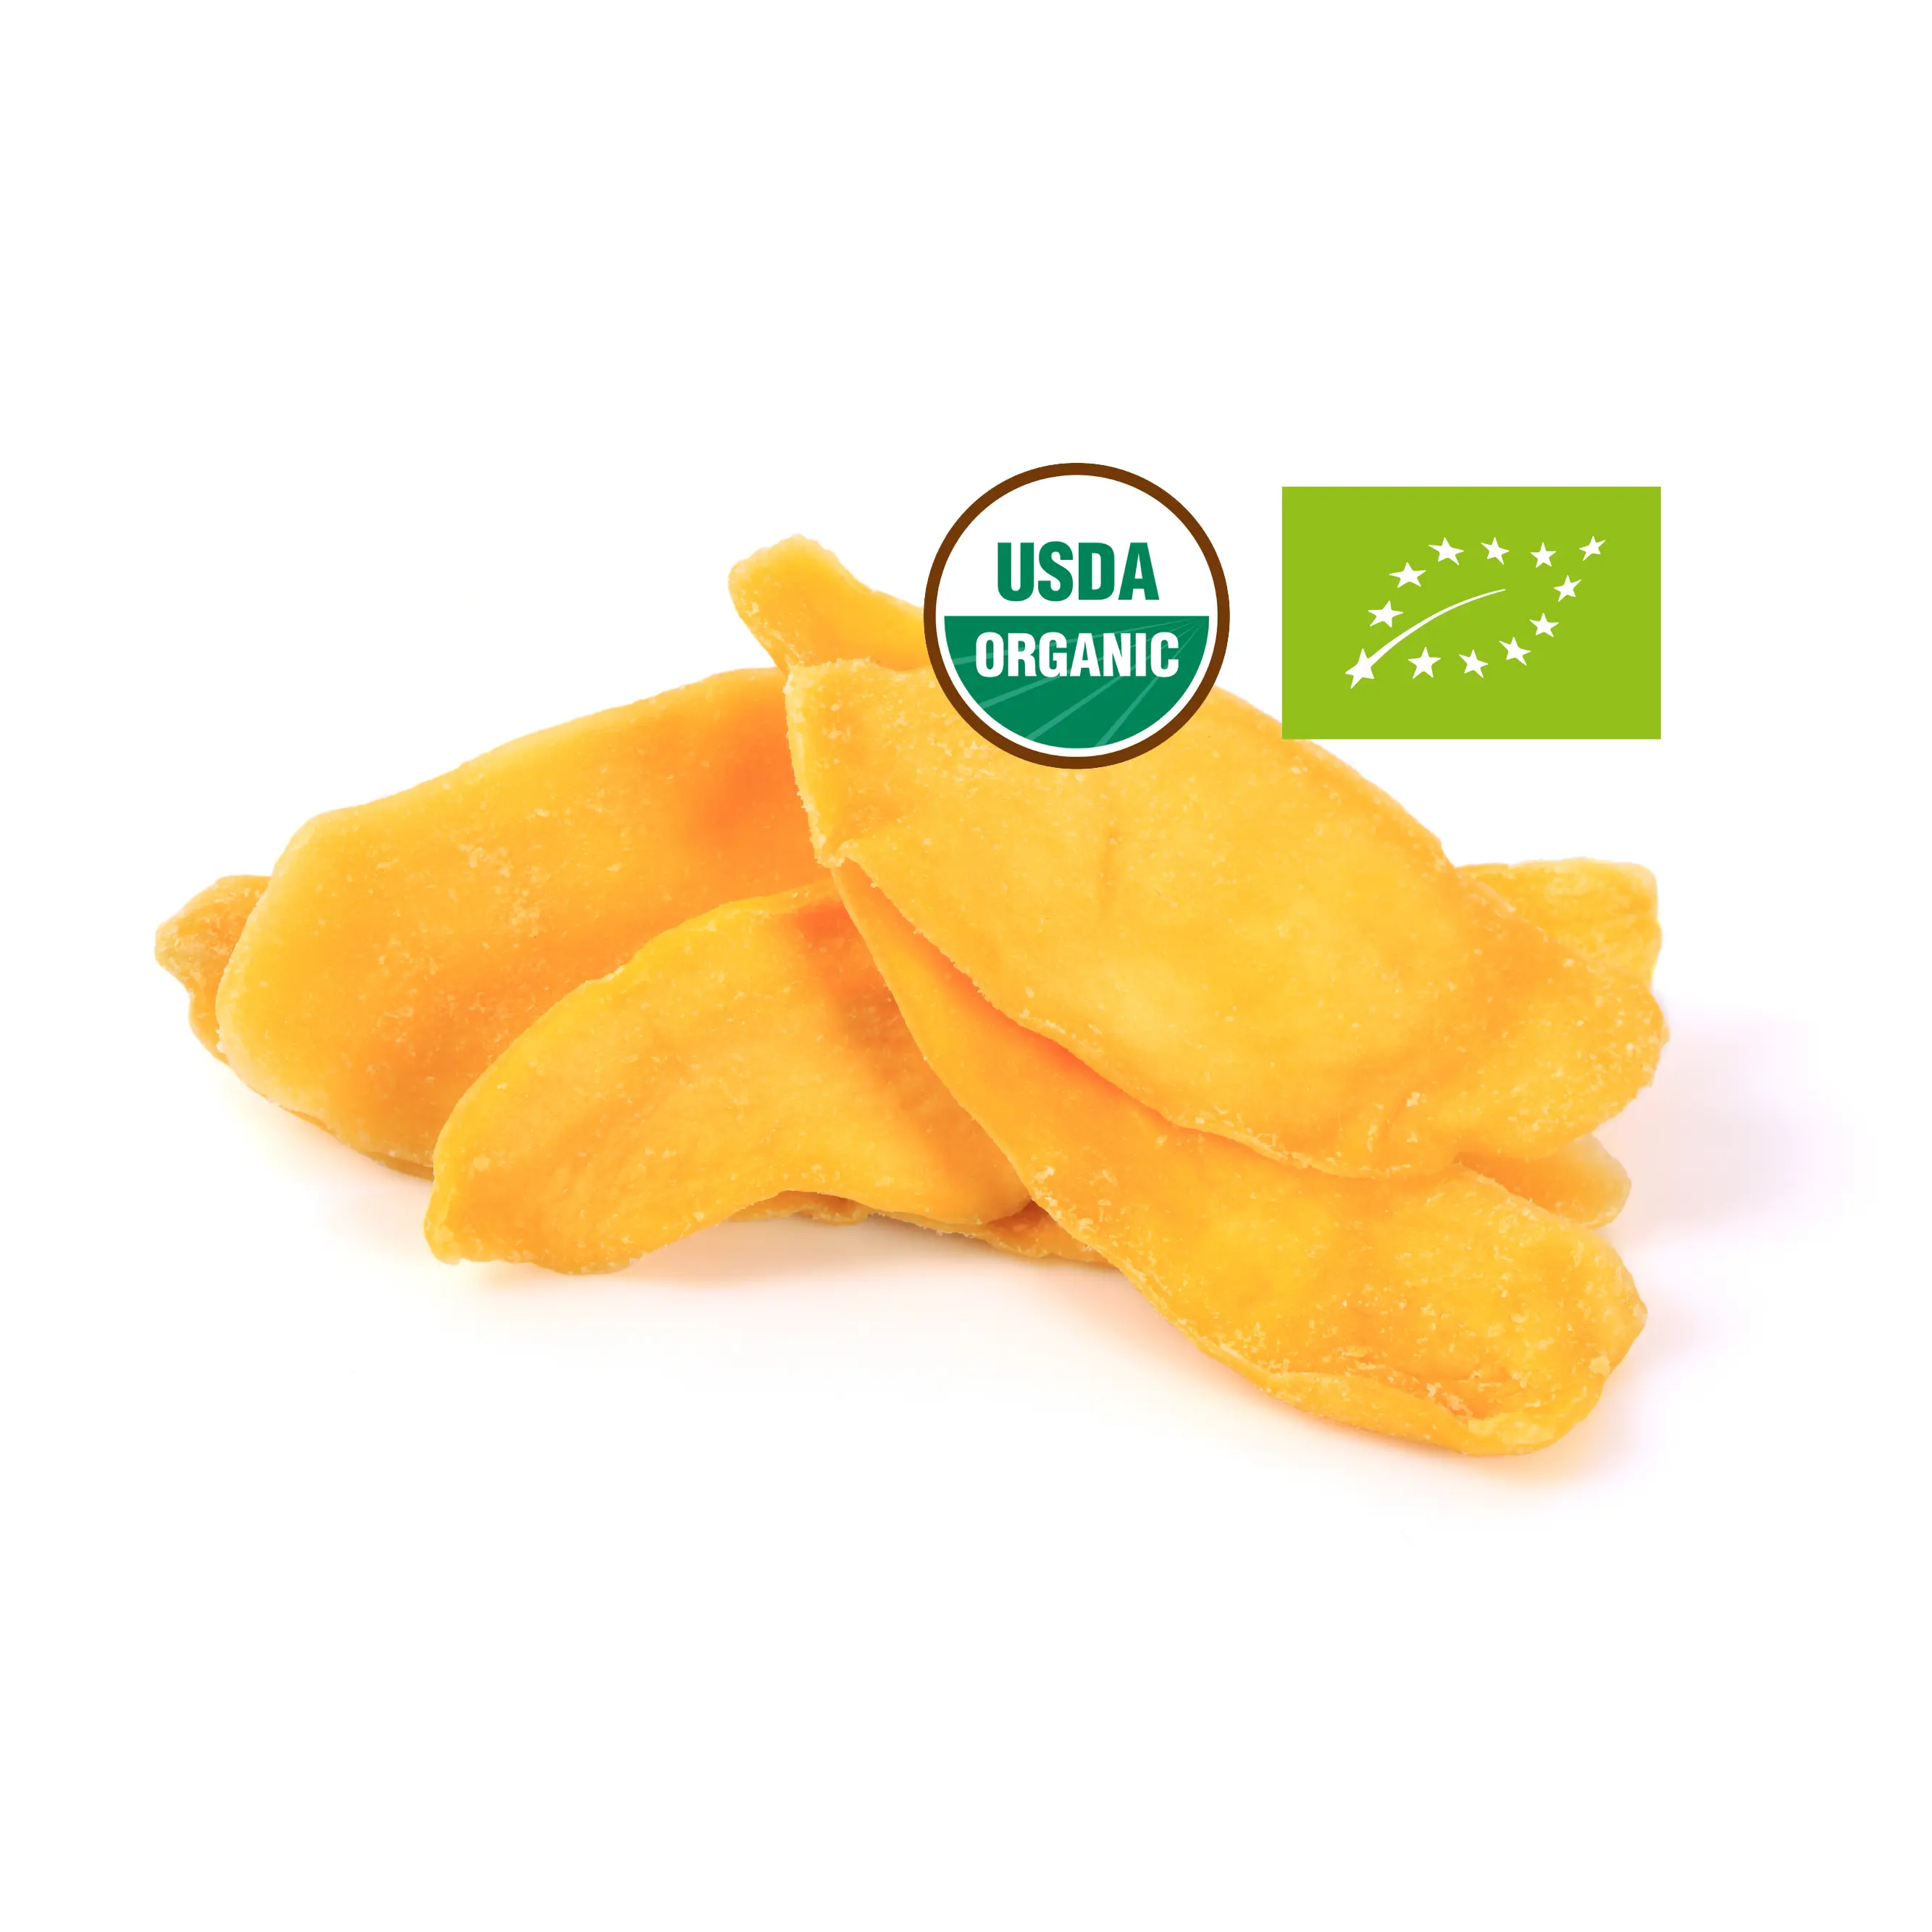 Organic Dried Mango USDA & EU Organic Certified Dry Mango Slice One Ingredient Only Zero Sugar From Thailand Dried Fruit Mango